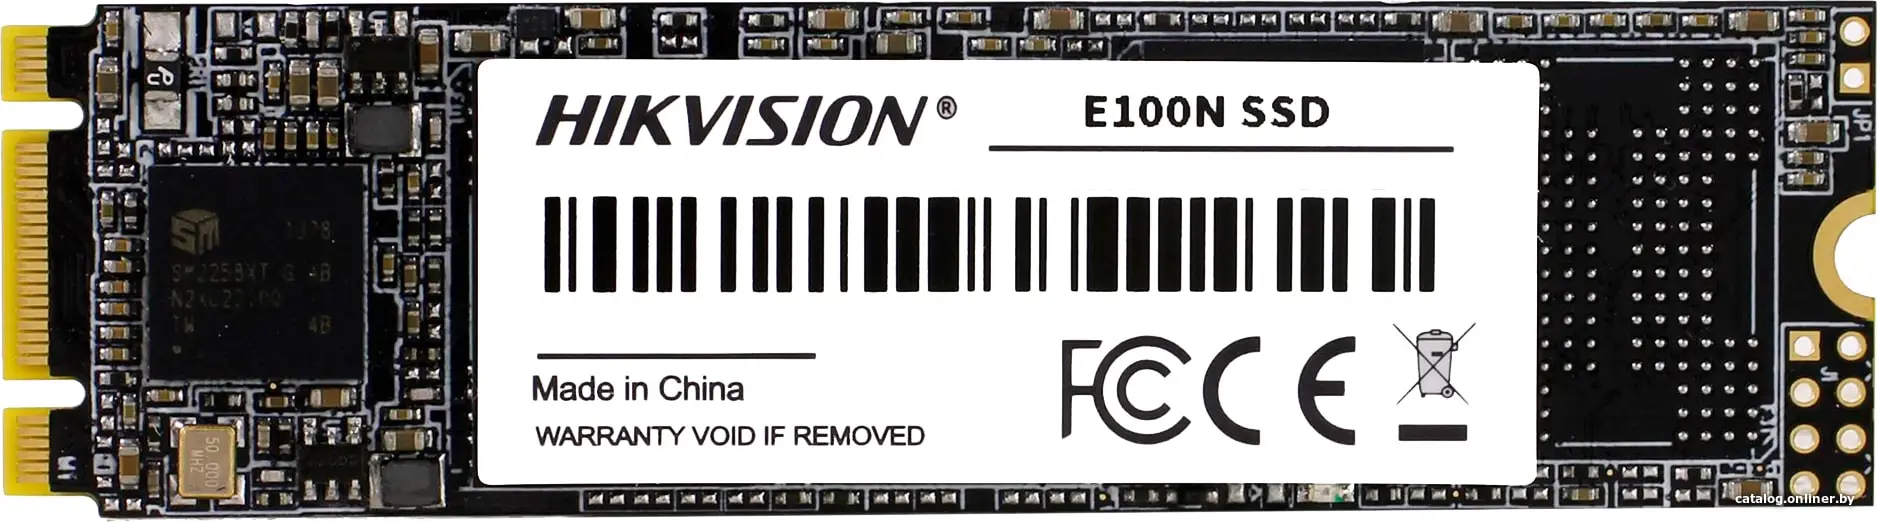 Купить Накопитель SSD Hikvision SATA III 256Gb HS-SSD-E100N/256G M.2 2280, цена, опт и розница